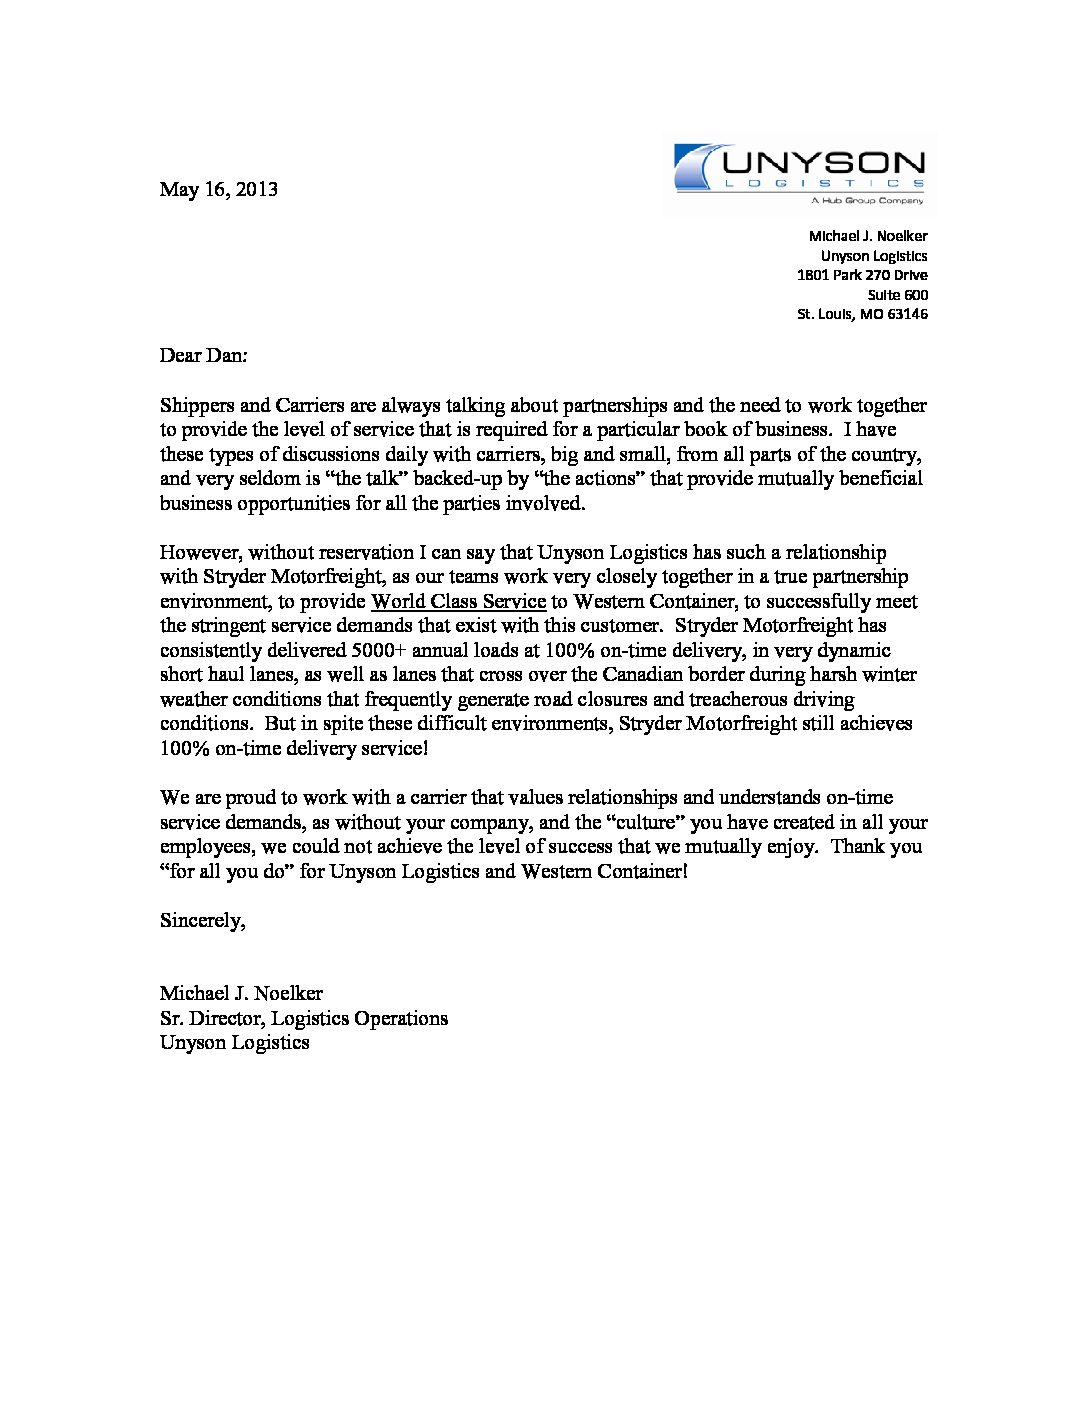 Stryder client Unyson Logistics' thank you letter for excellent service